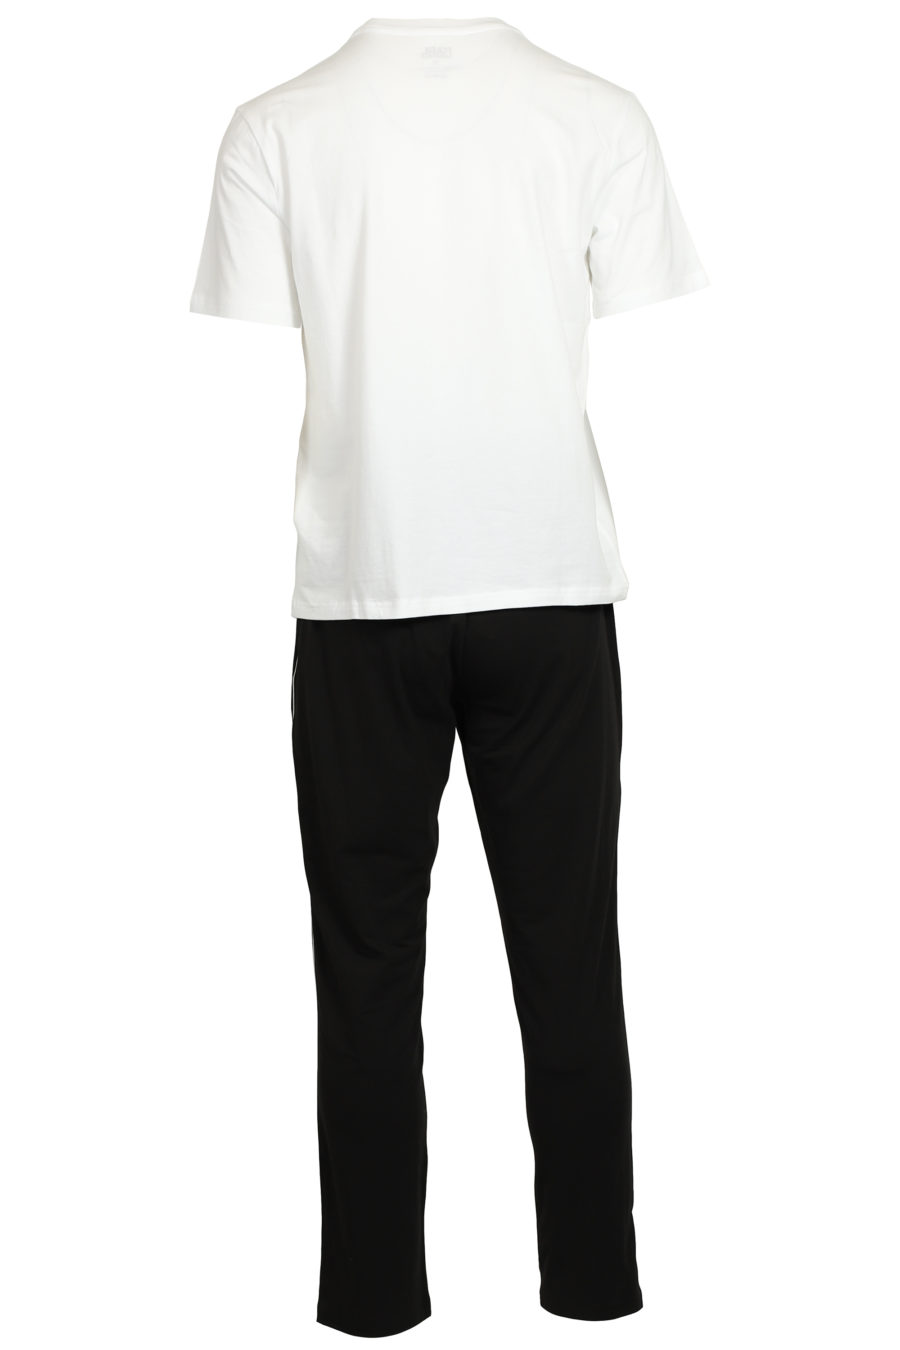 Black and white pyjama set with rubber logo - IMG 3736